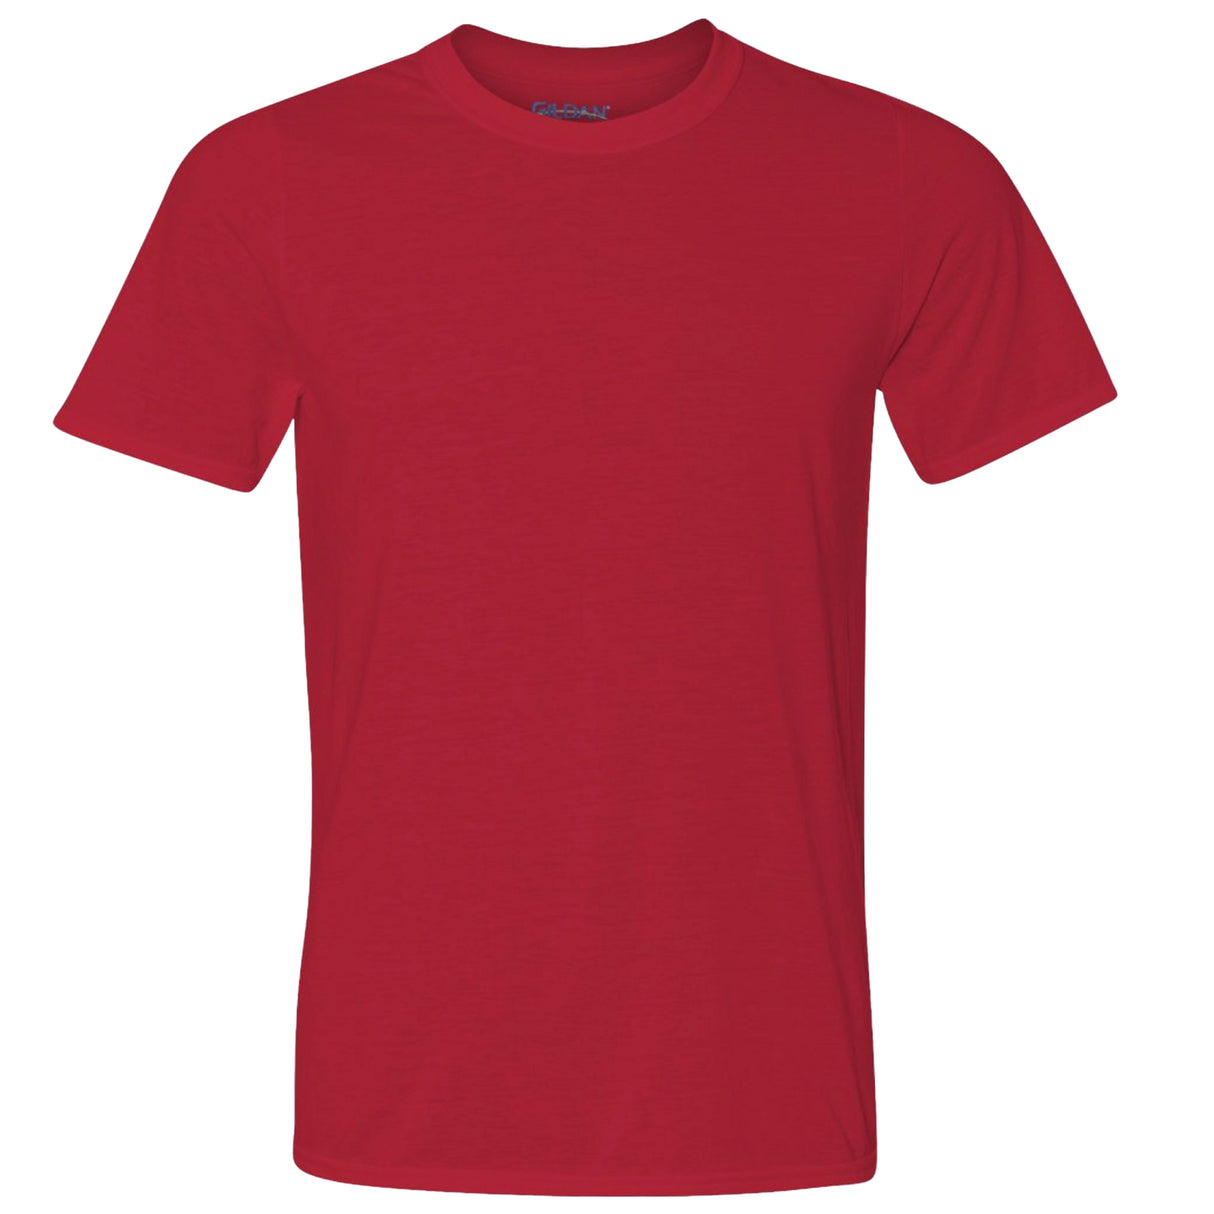 performance t shirt short sleeve red